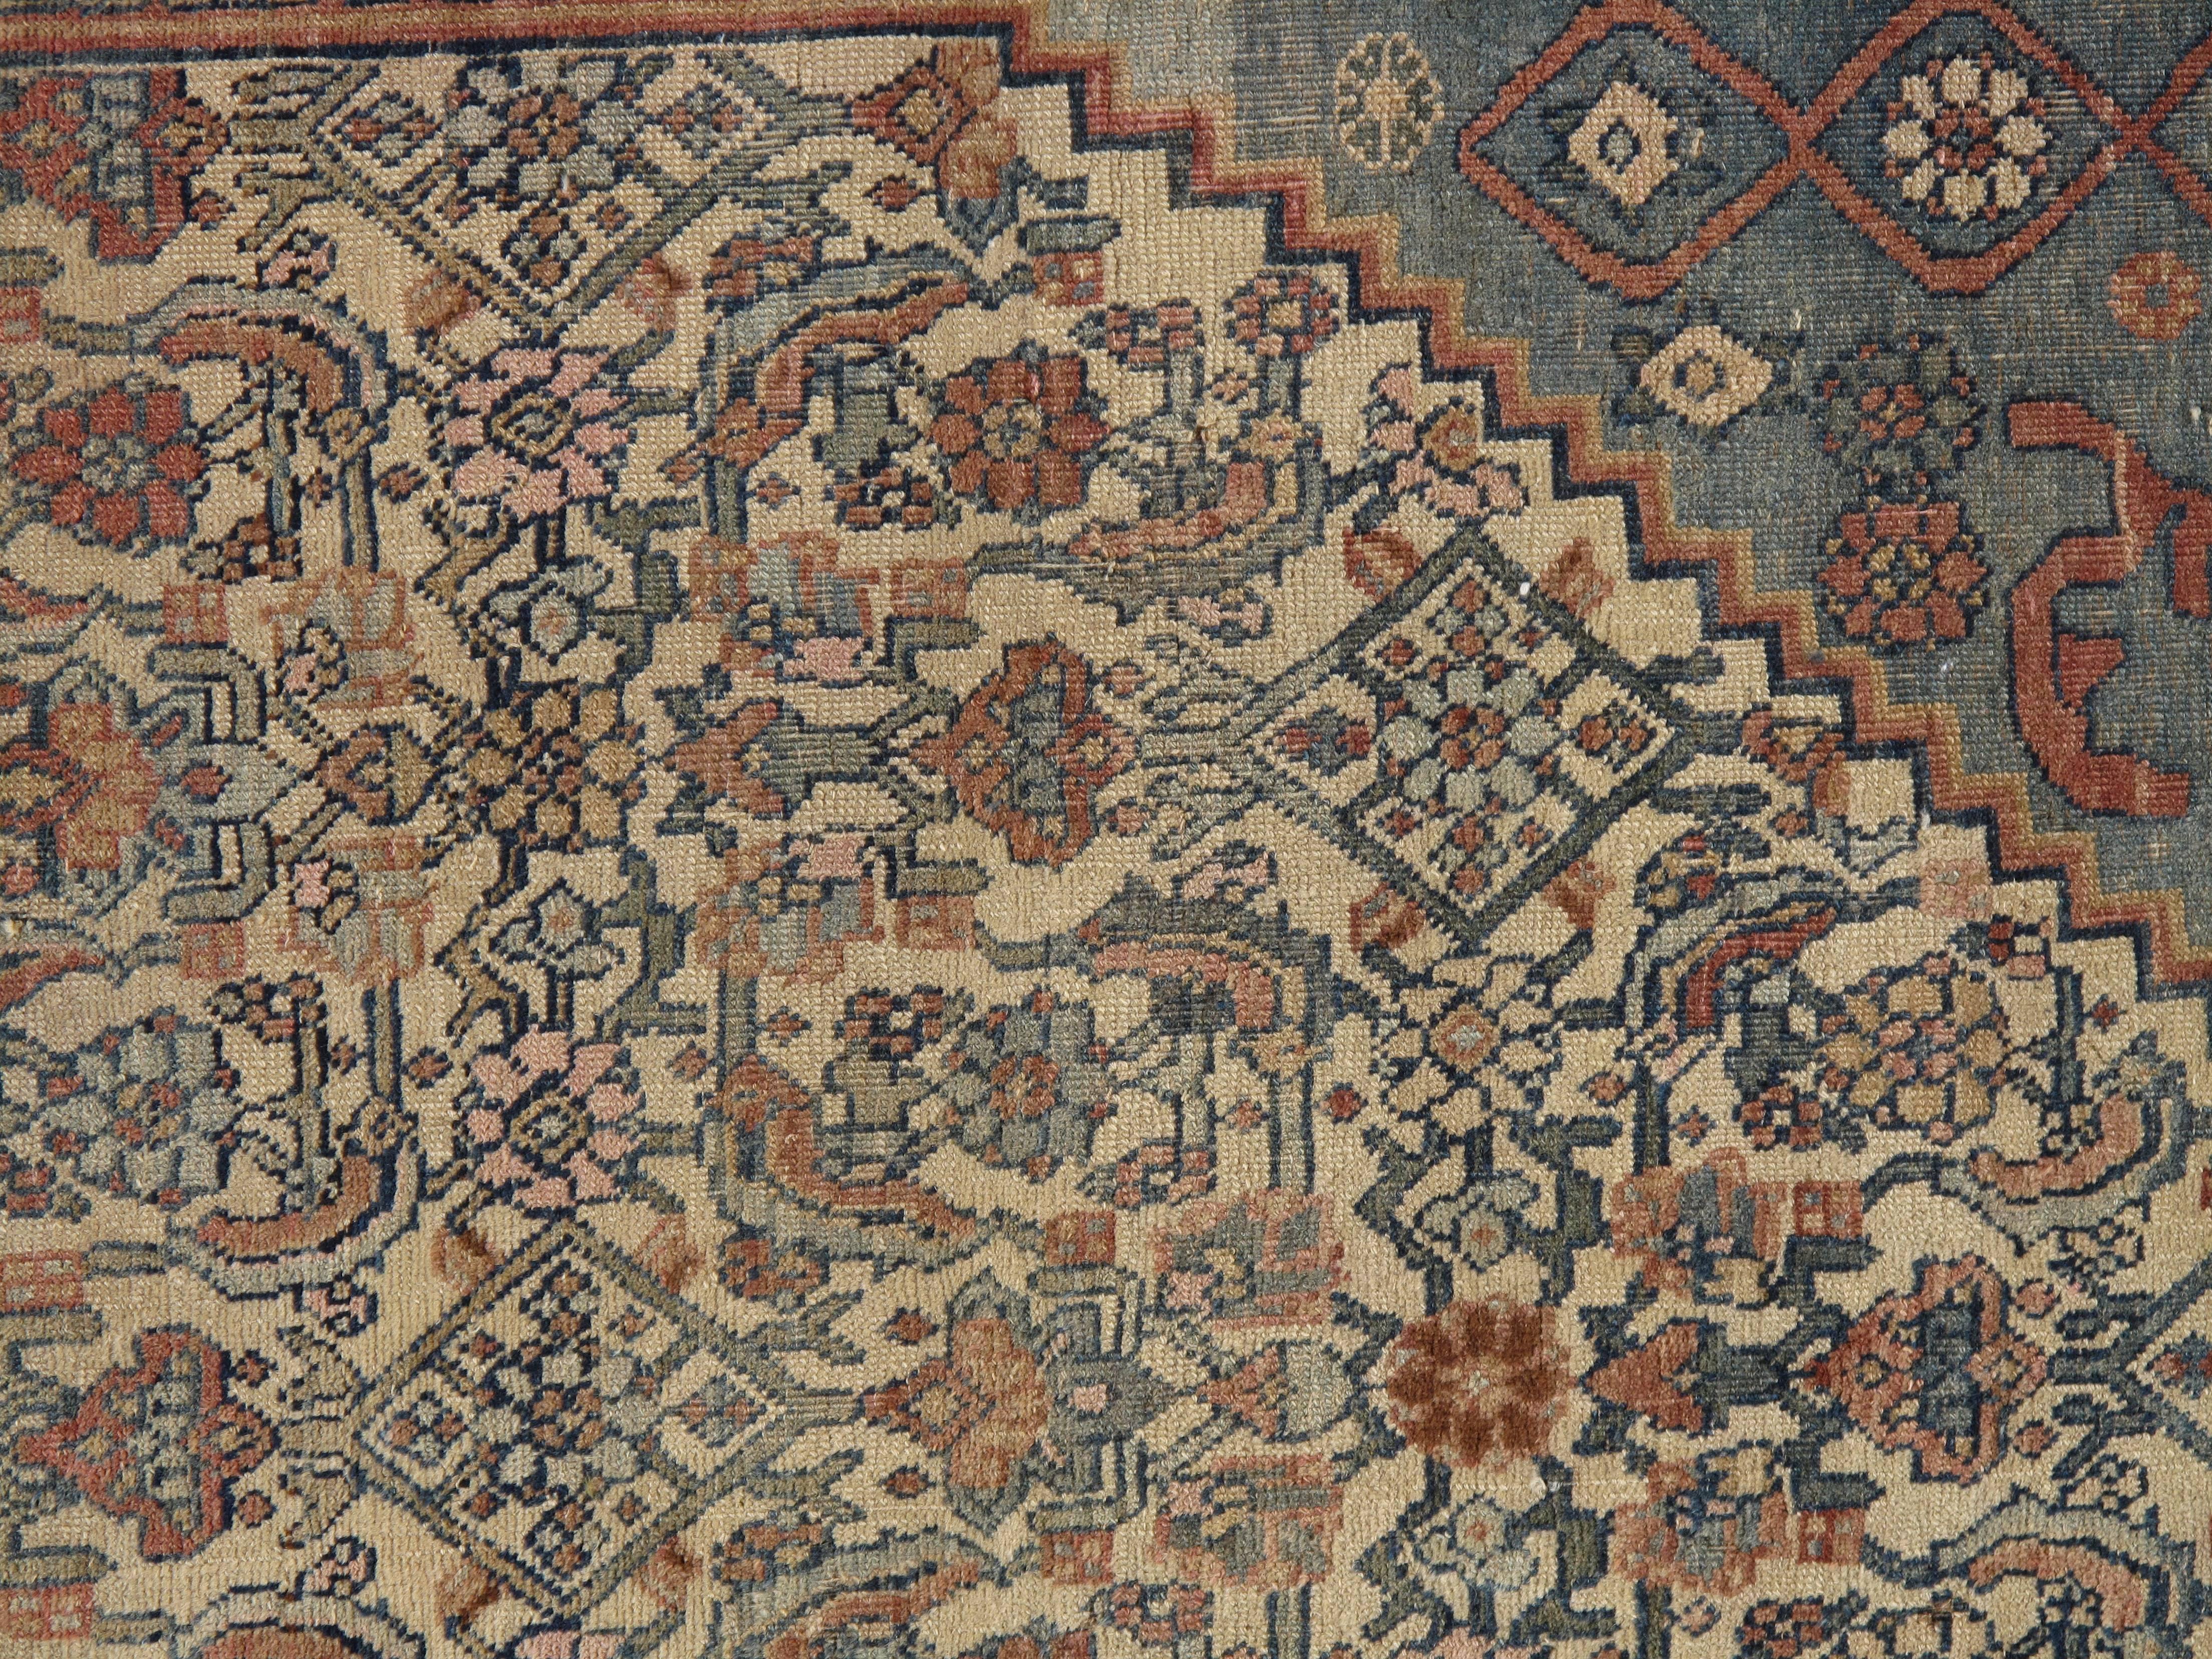 Antique Bijar Carpet Oriental Rug, Handmade, Ivory and Light Blue, Terracotta (19. Jahrhundert)